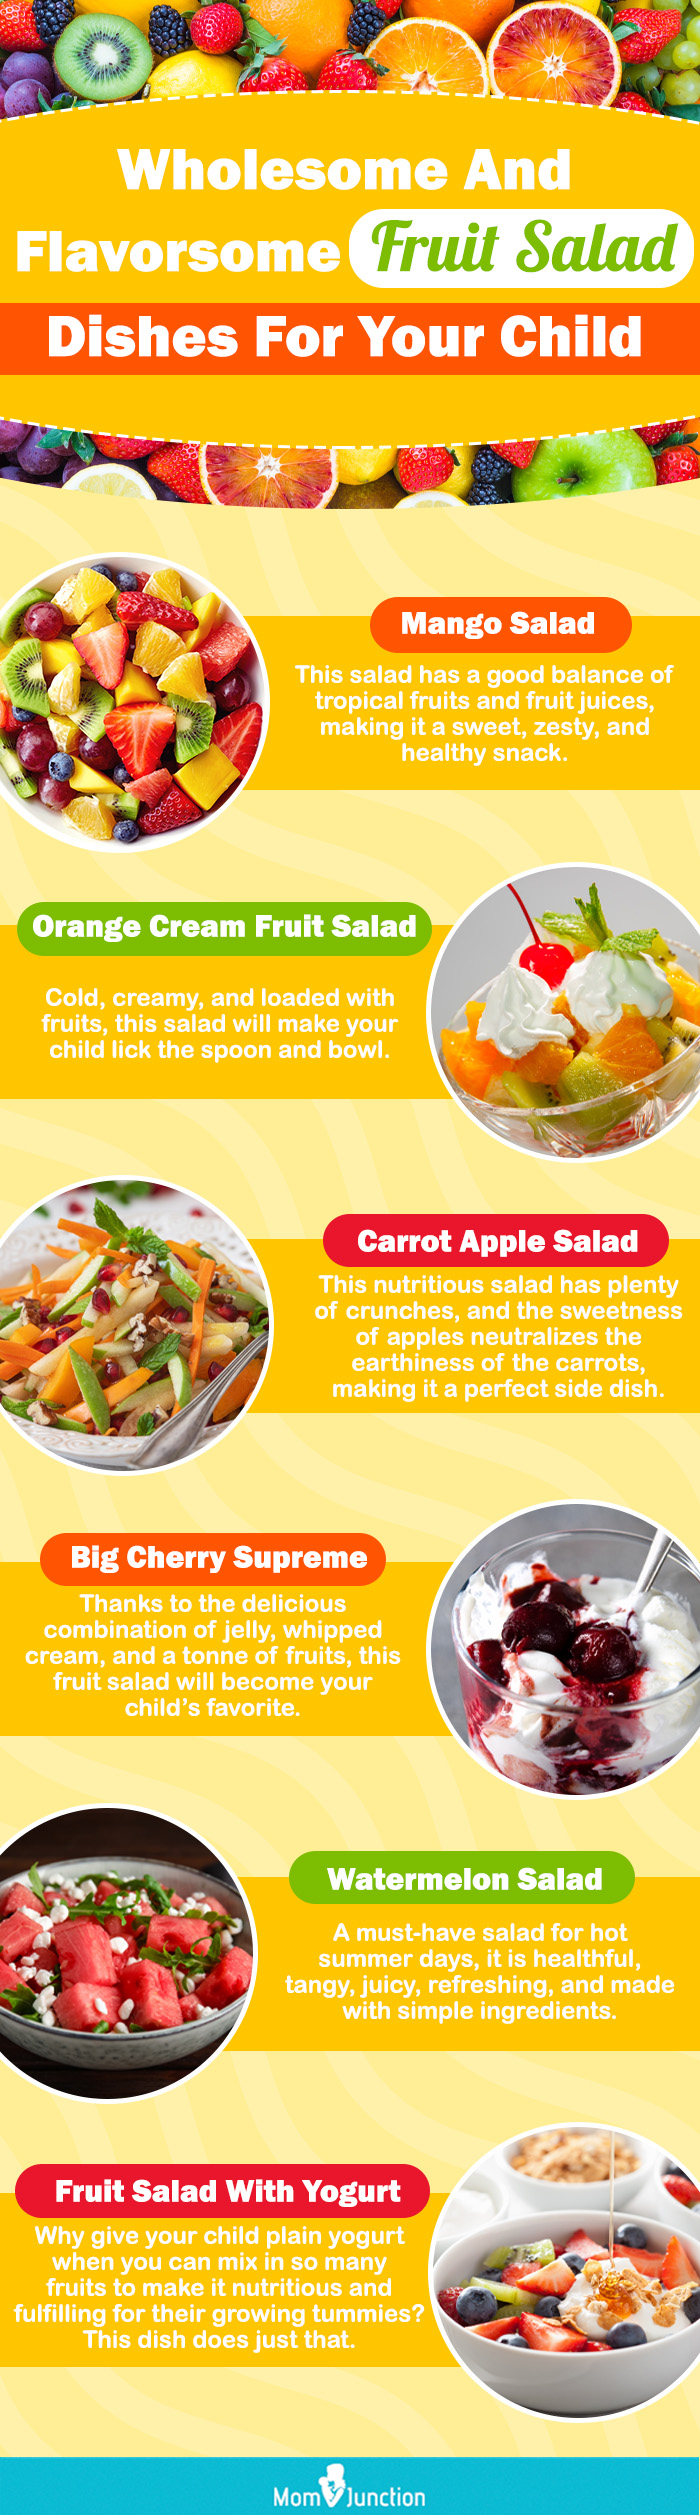 Rainbow Fruit Salad Jars Recipe - Eats Amazing.